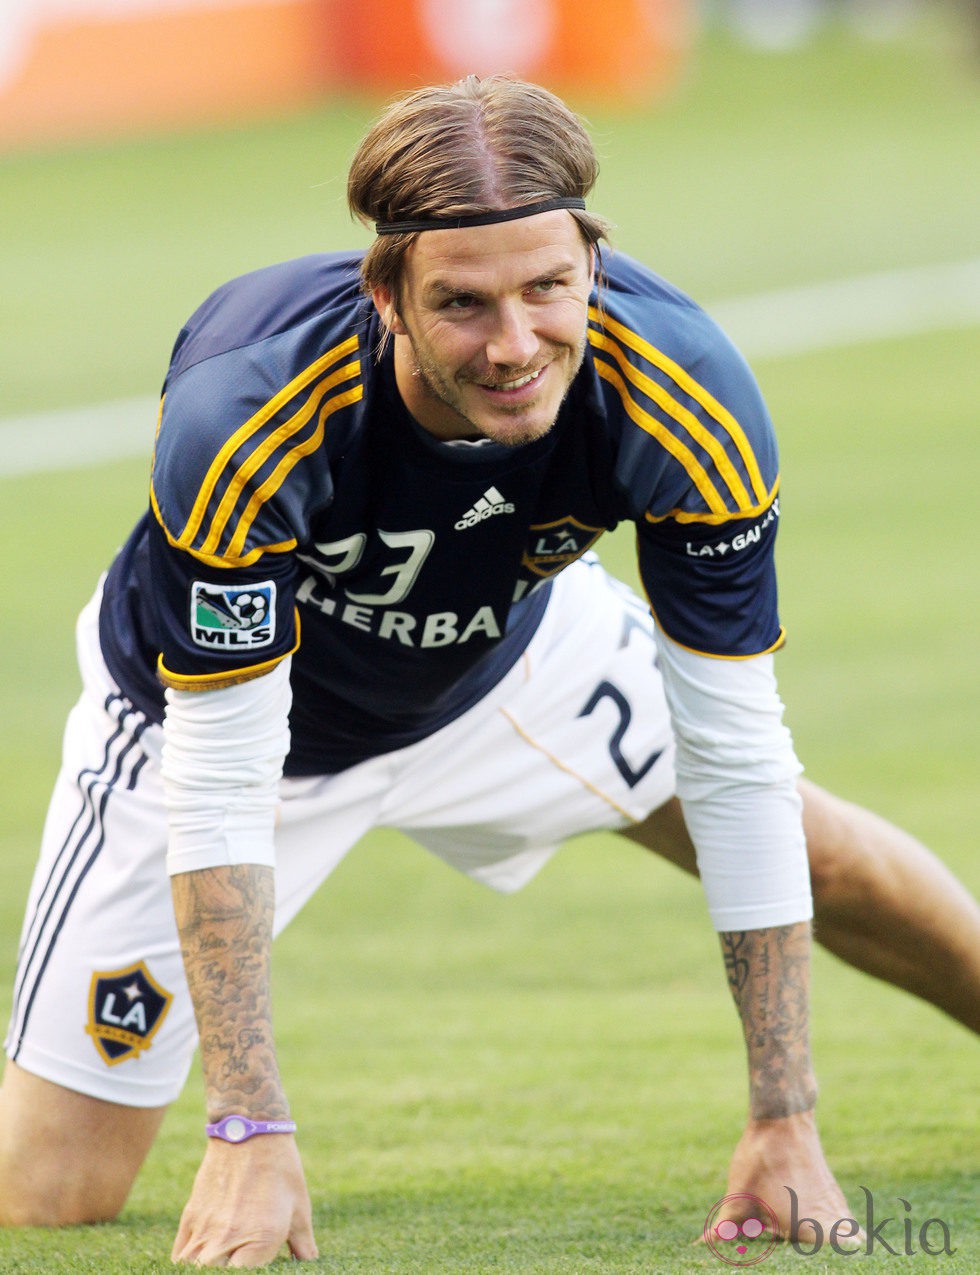 David Beckham con una Power Balance durante un partido